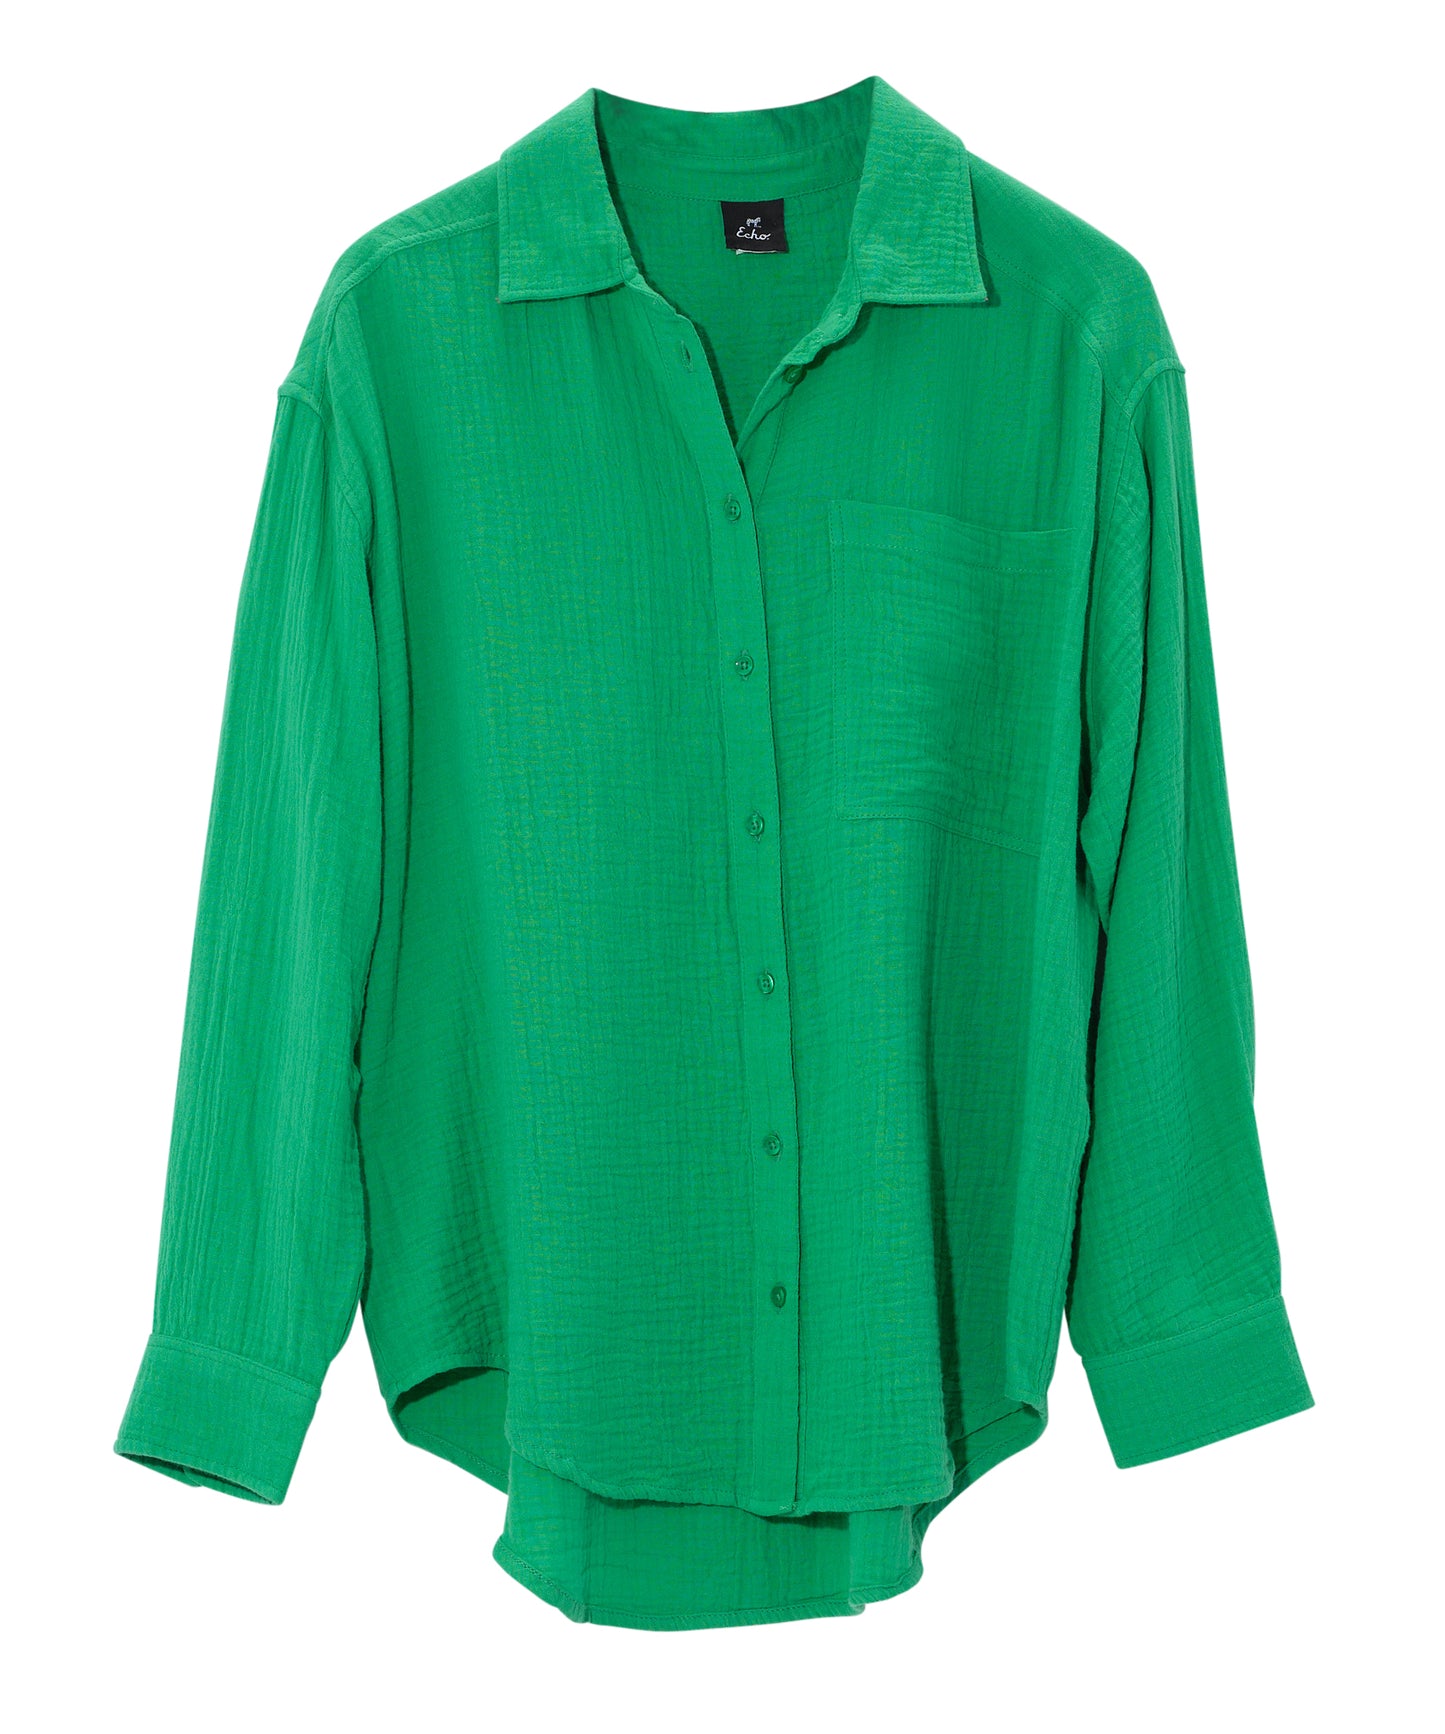 Supersoft Gauze Boyfriend Shirt in color palm green